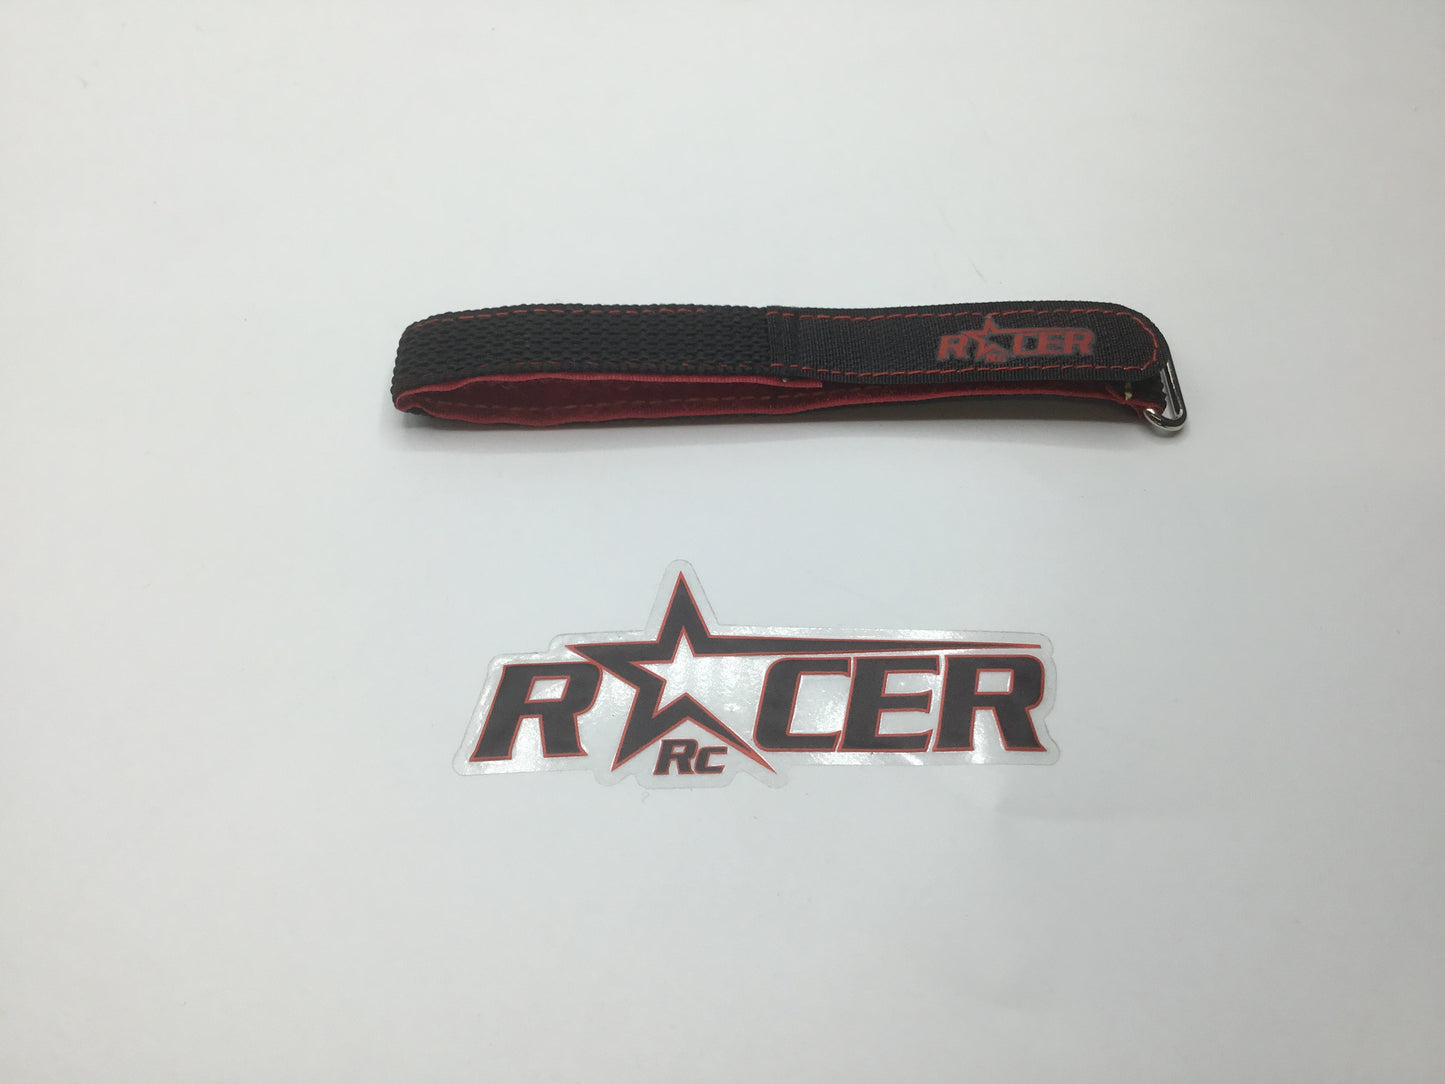 Racer RC short logo Velcro strap for Knuckle Up Big Gun 8800mah battery